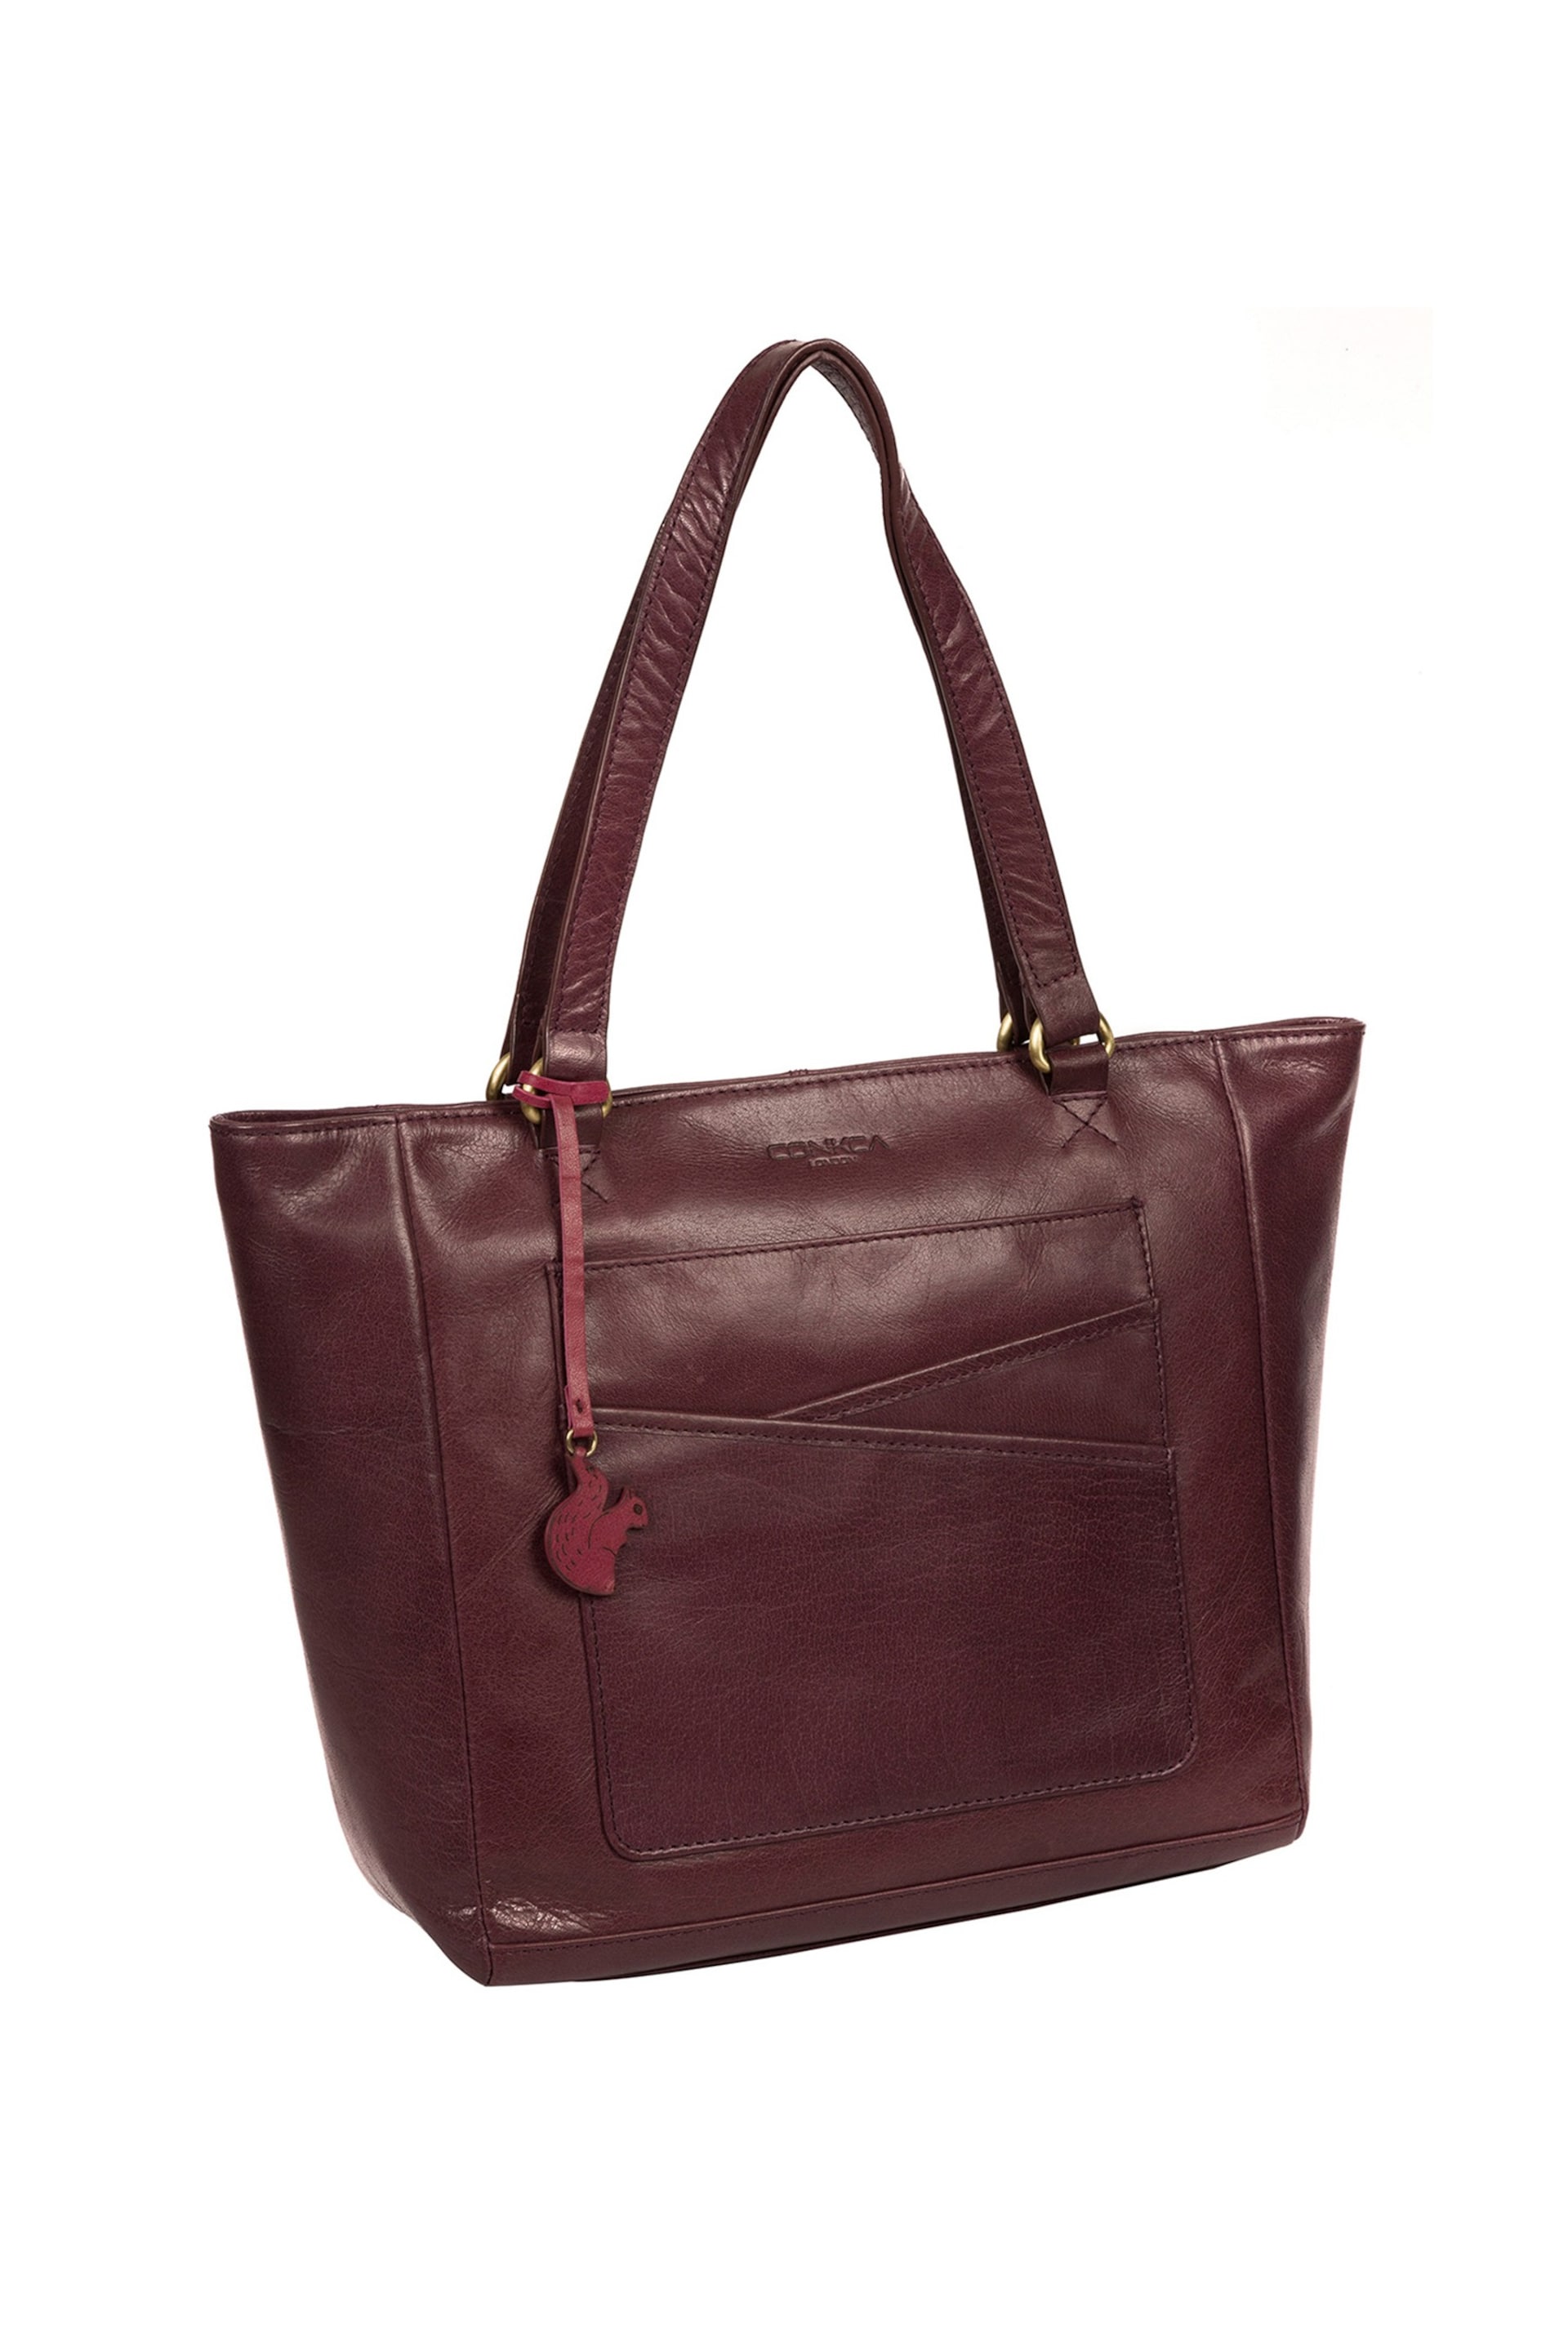 Conkca Monique Leather Tote Bag - Image 4 of 6